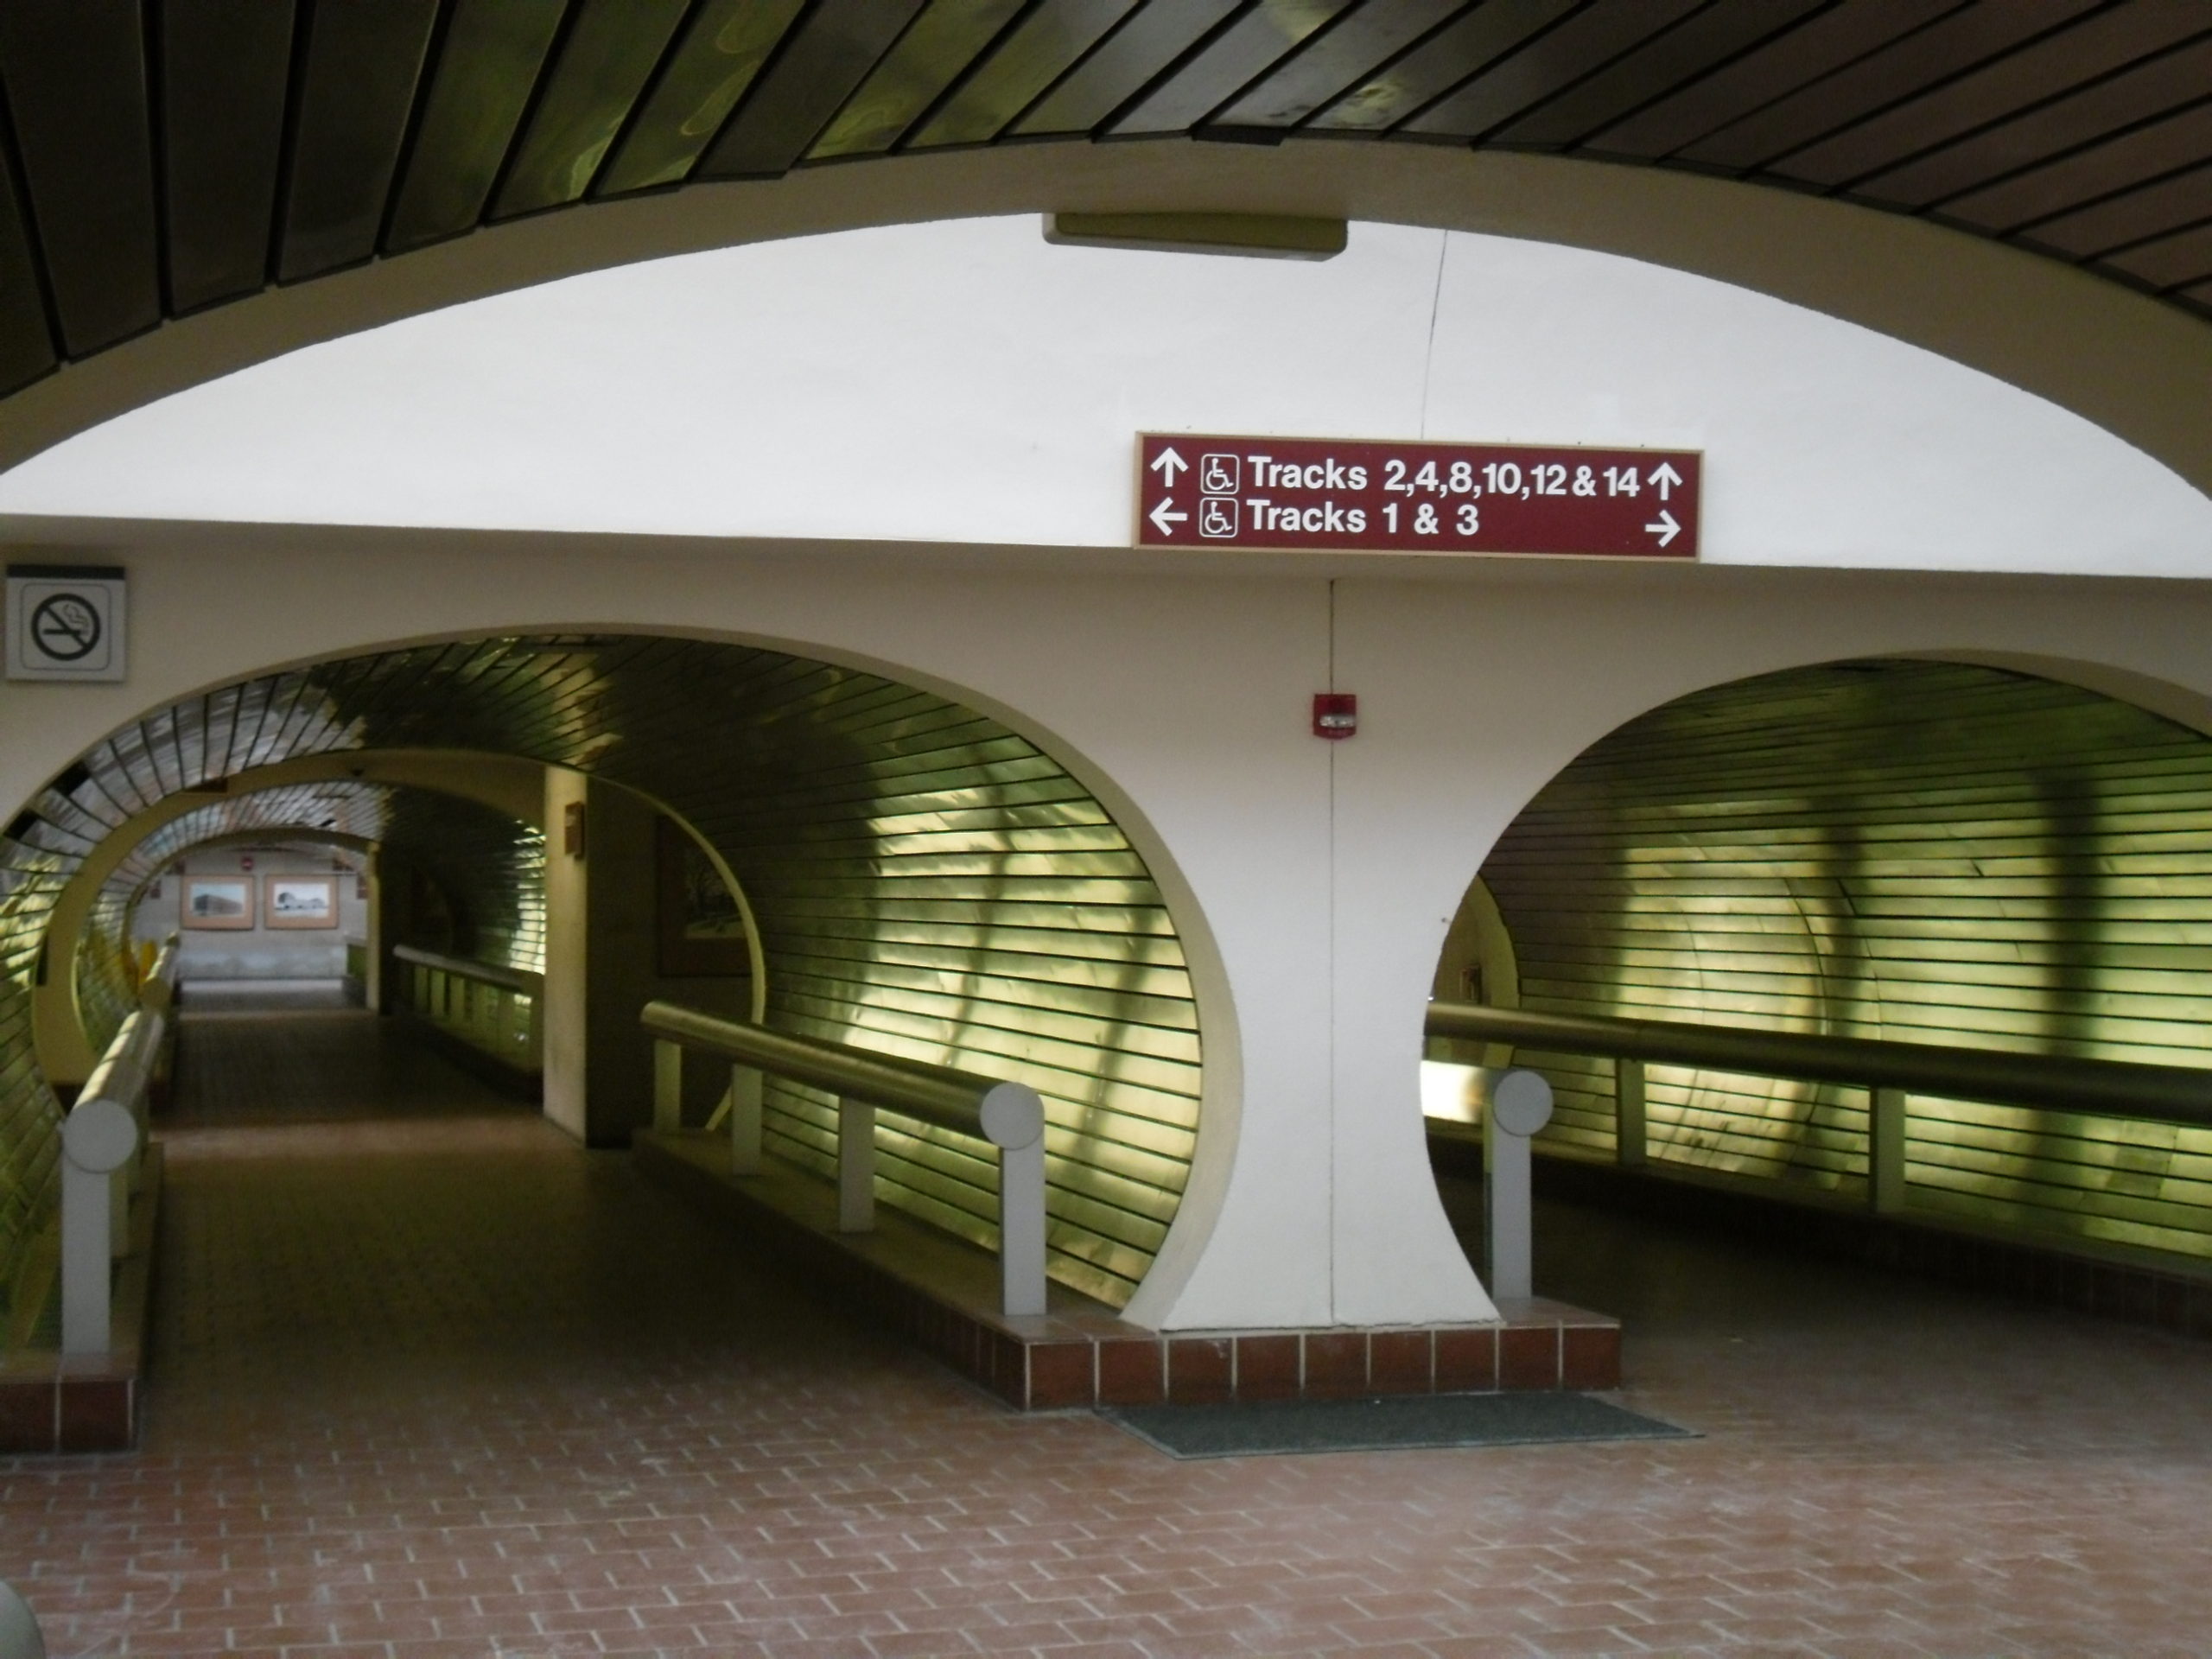 Union Station Tunnels